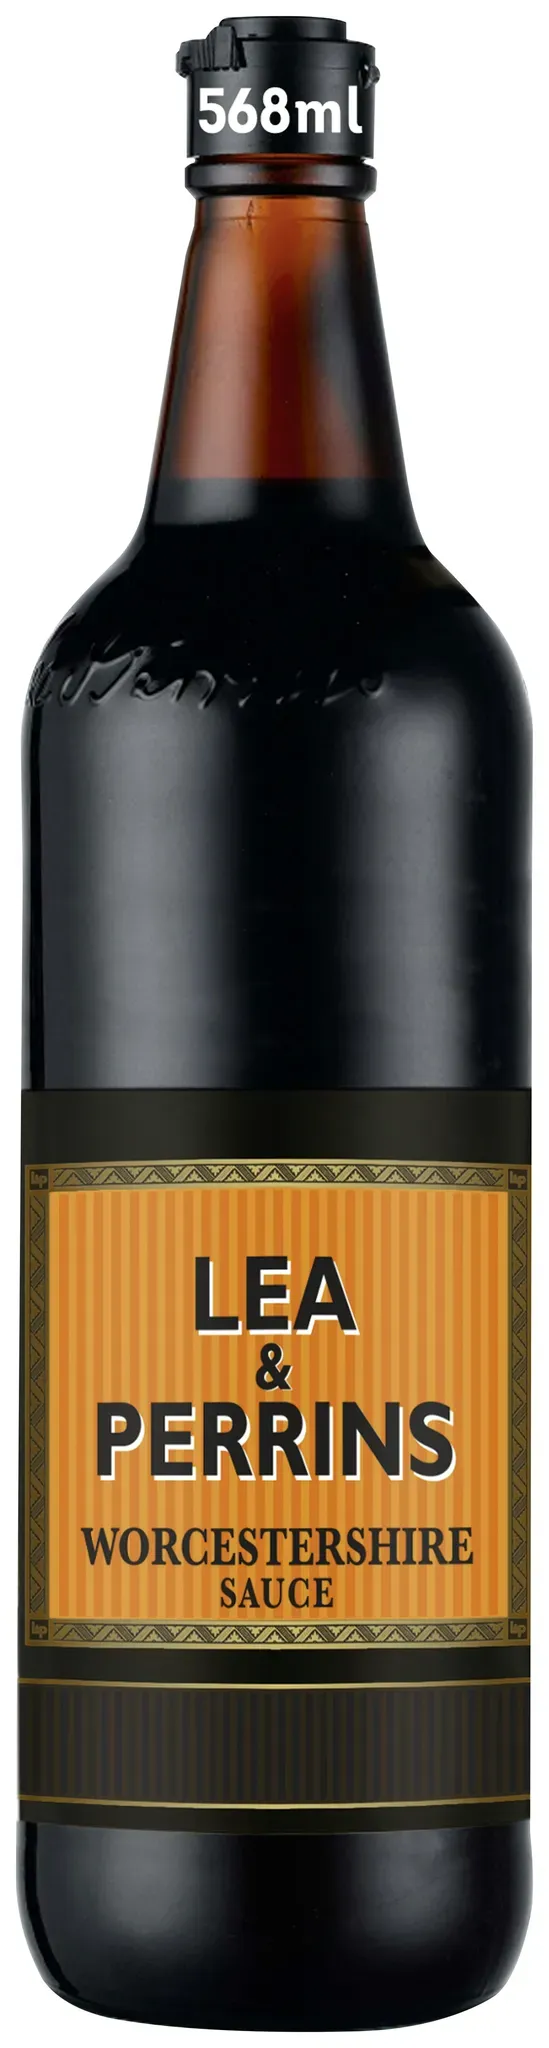 Lea & Perrins Worcestershire Sauce (568 ml)